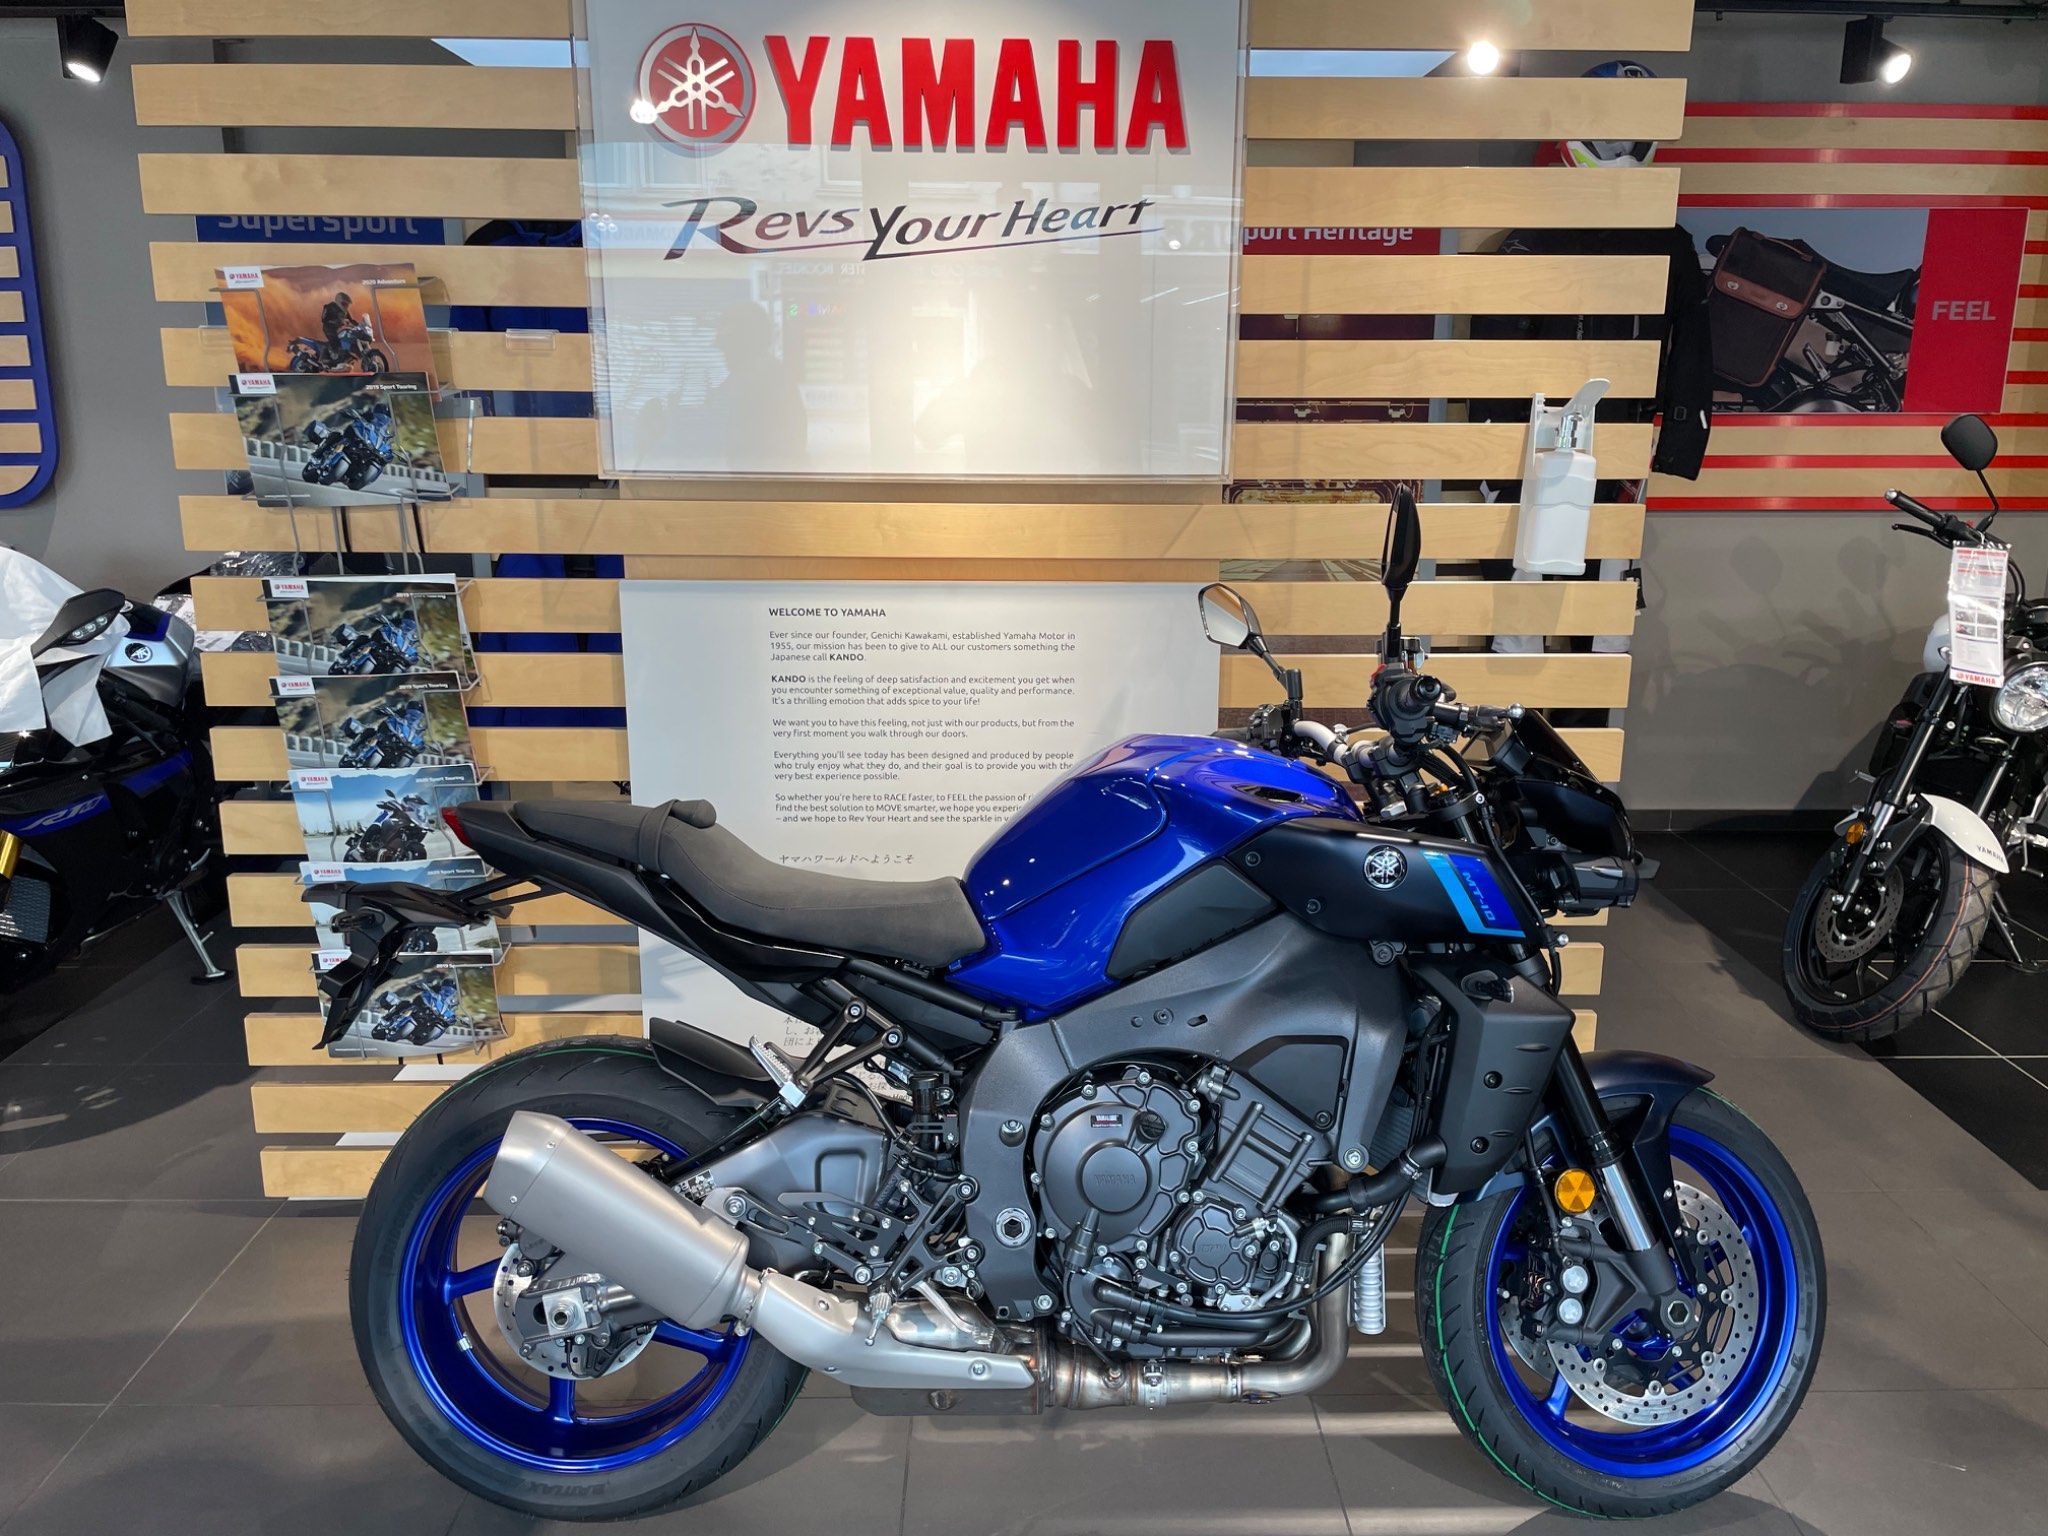 New Yamaha MT-10 1000 ABS